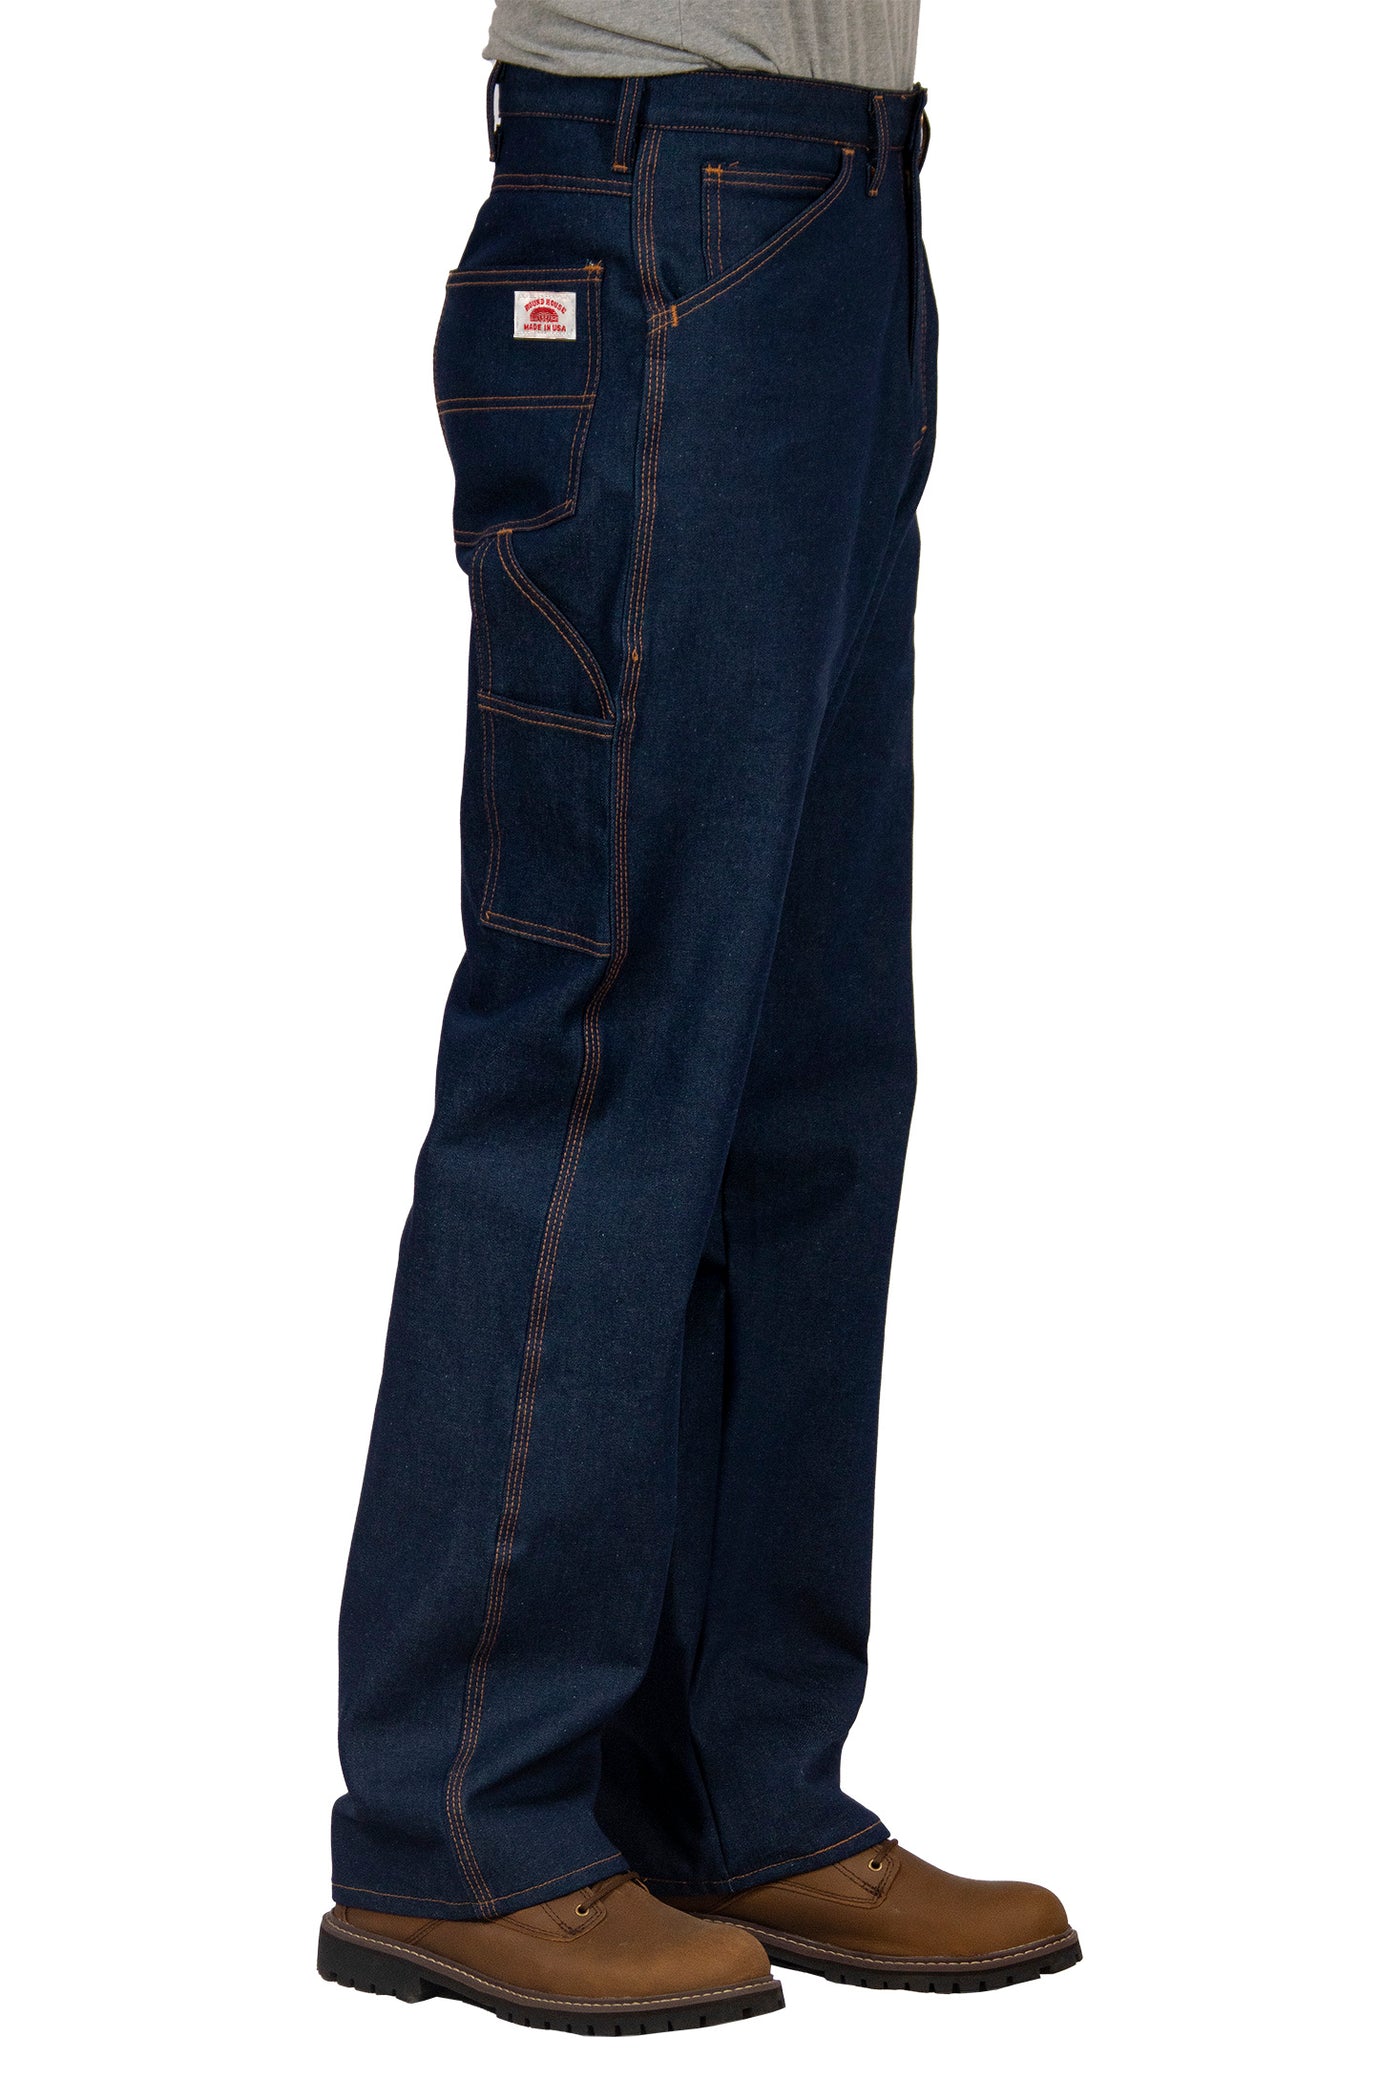 Dickies Men's Relaxed Fit Straight Leg Rigid Carpenter Jeans